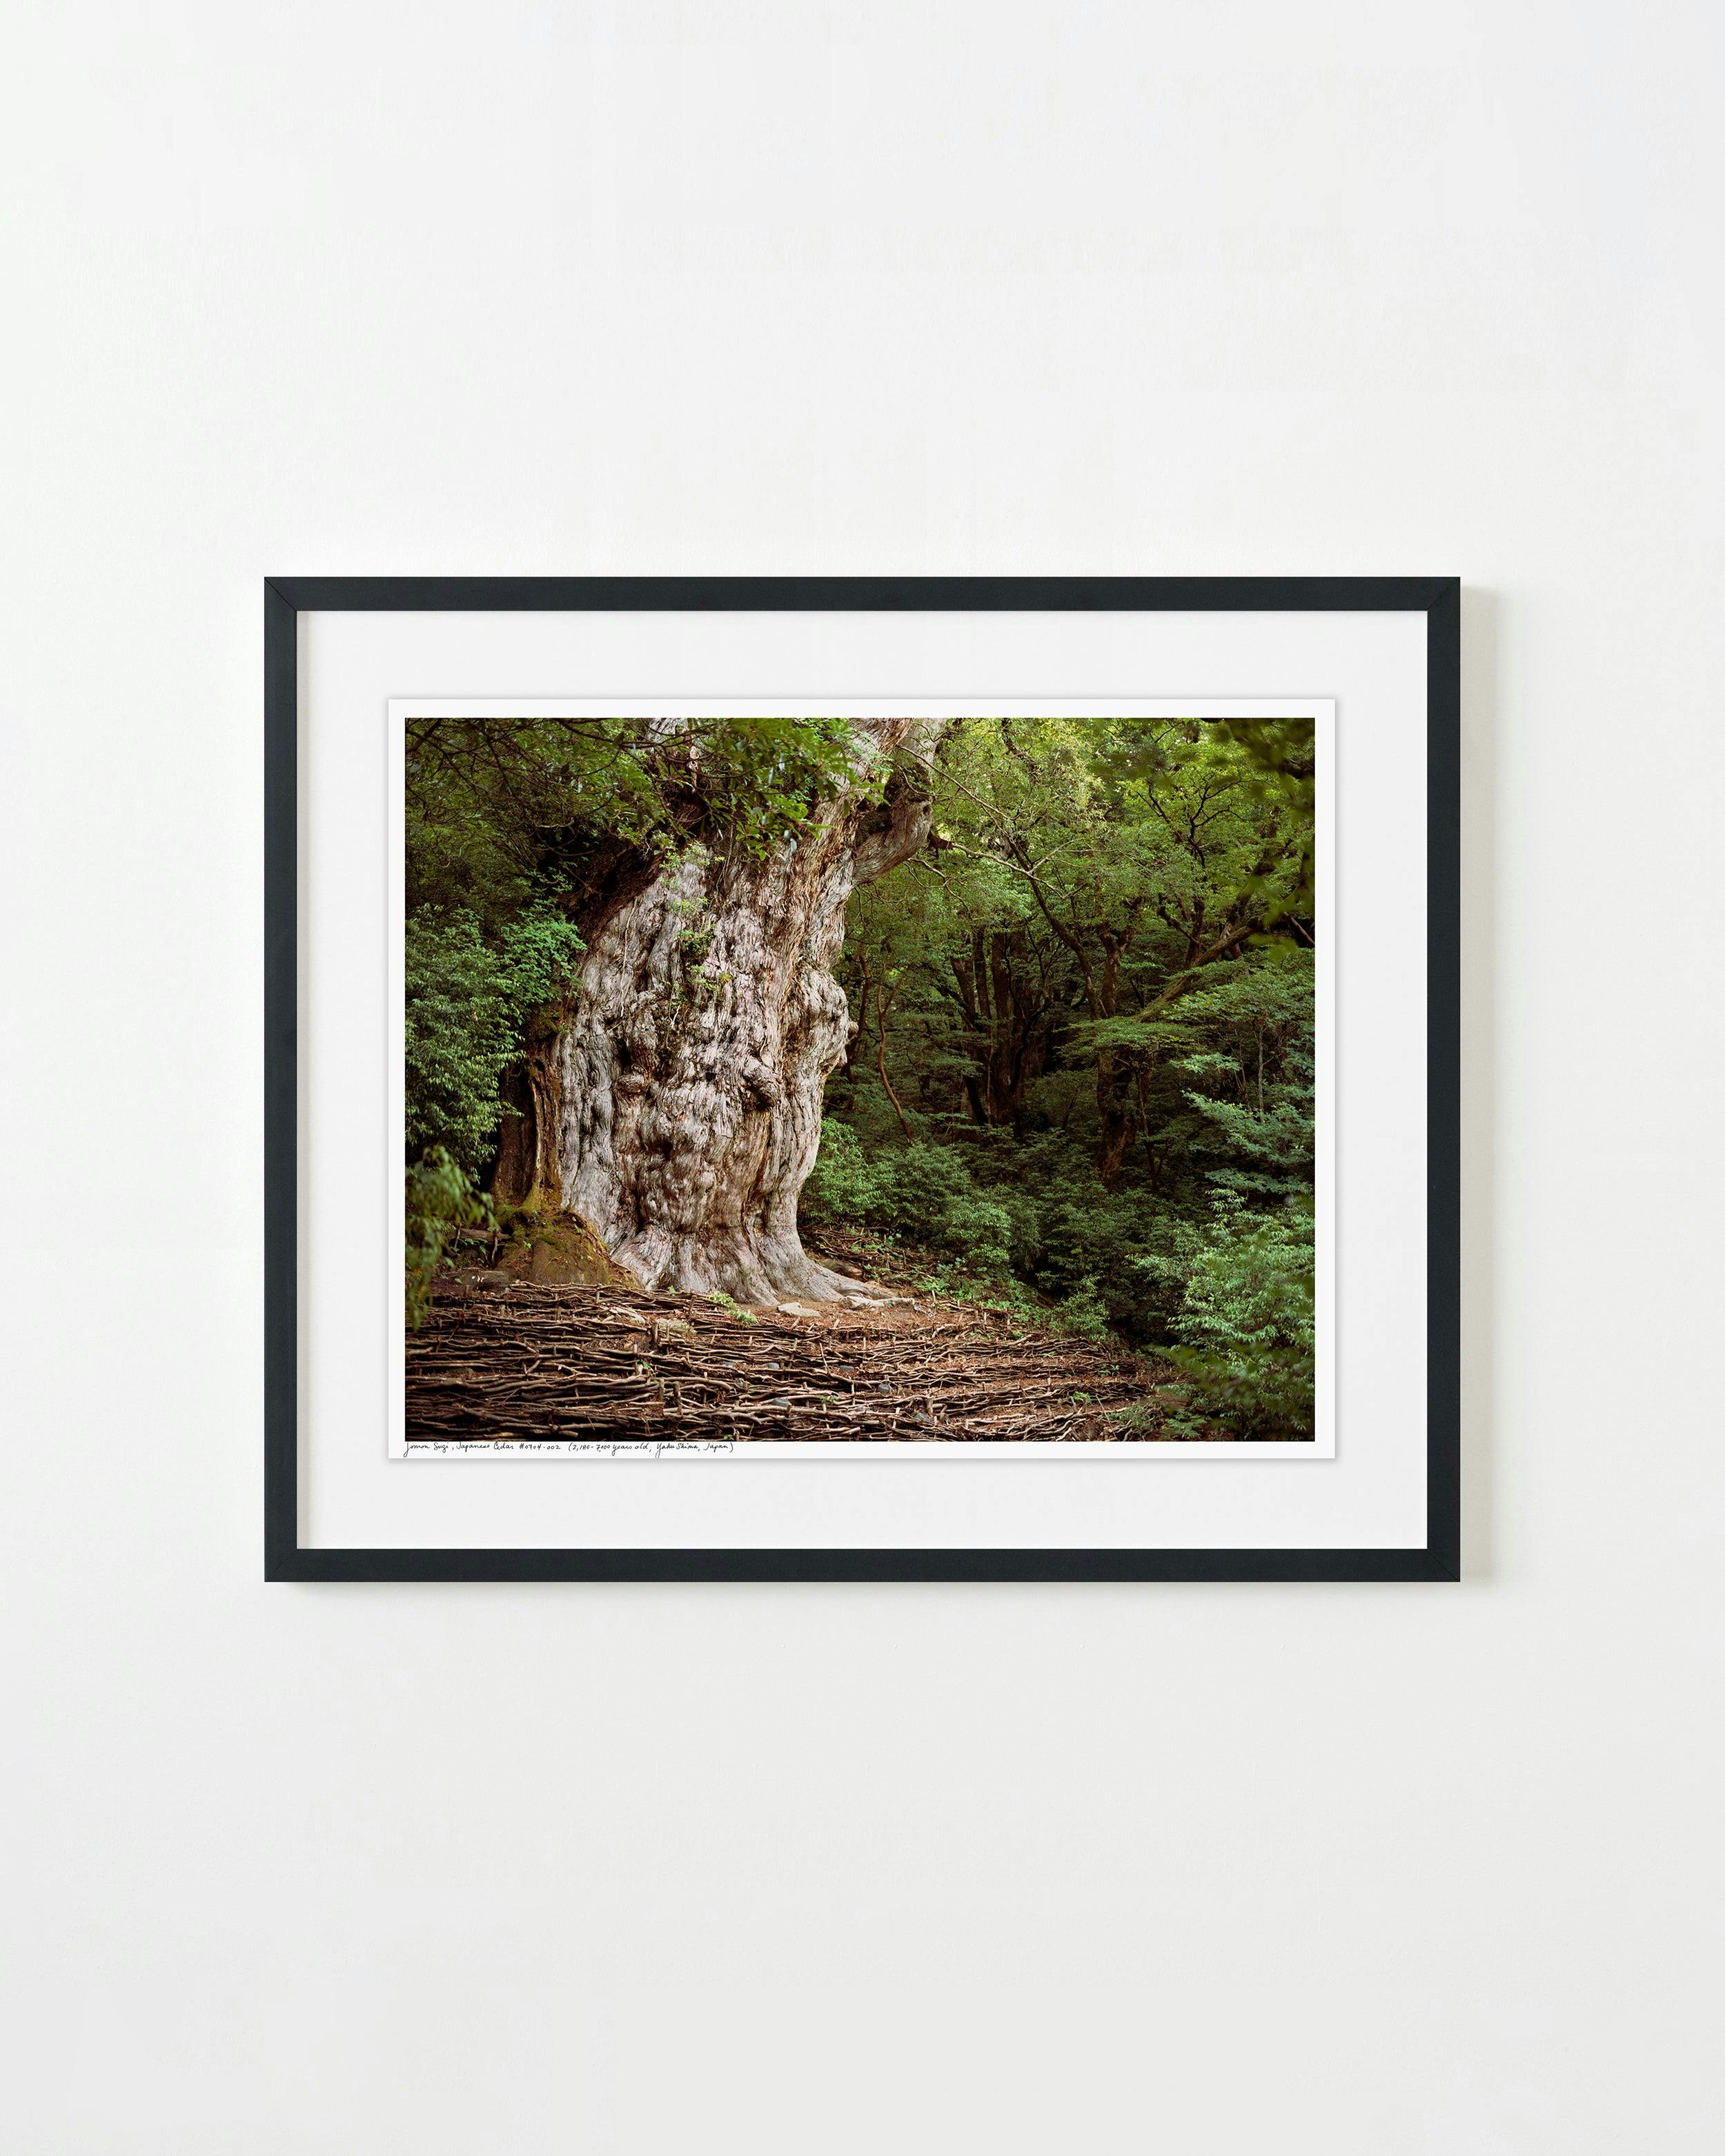 Photography by Rachel Sussman titled "Jomon Sugi, Japanese Cedar #0704-002 (2,180 to 7,000 years old; Yaku Shima, Japa".